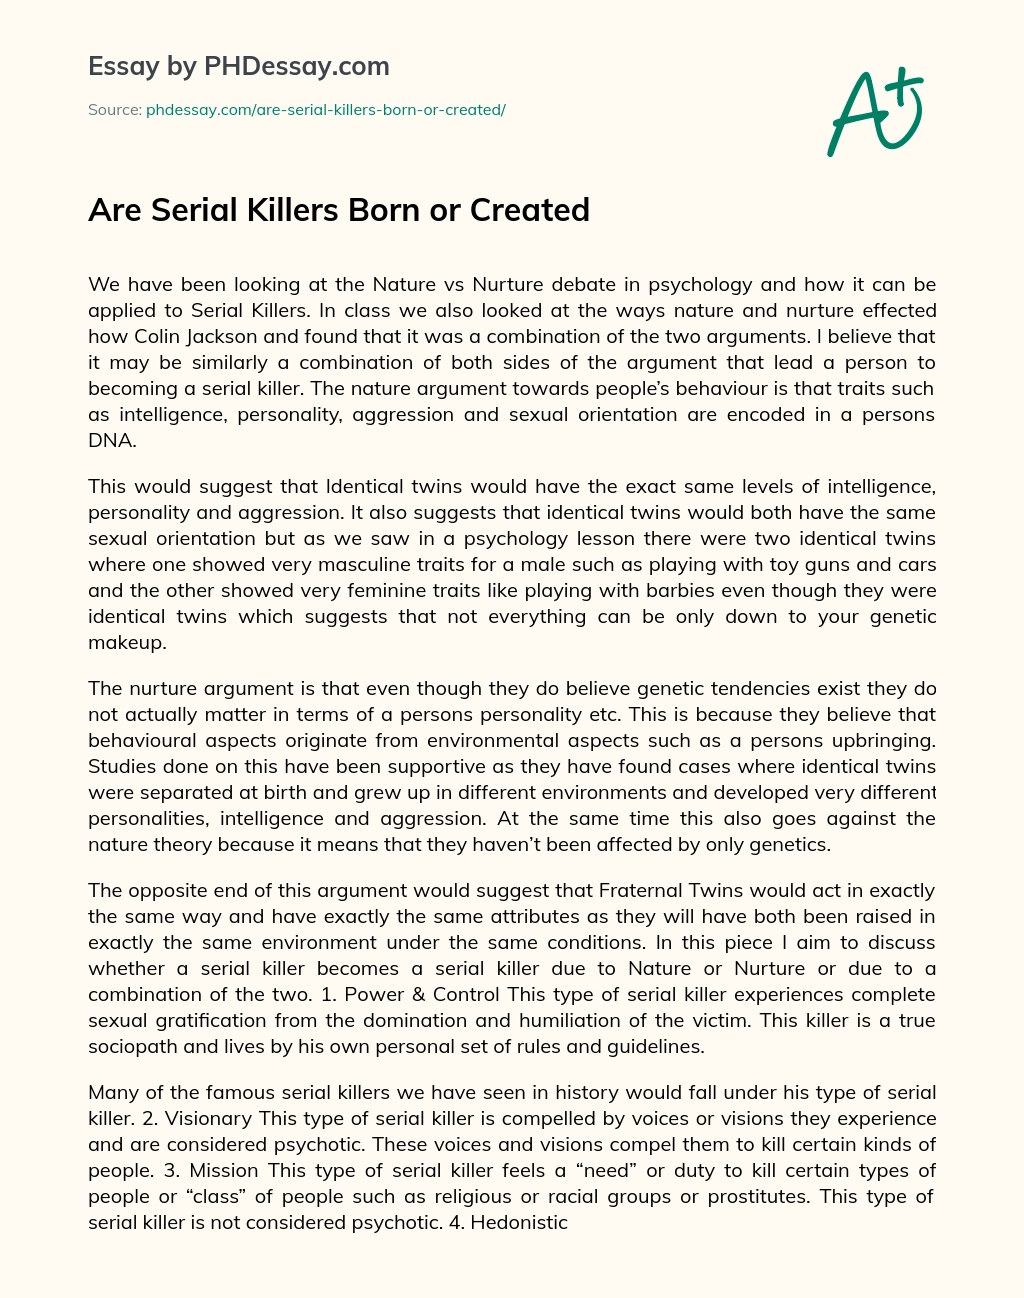 Are Serial Killers Born or Created essay